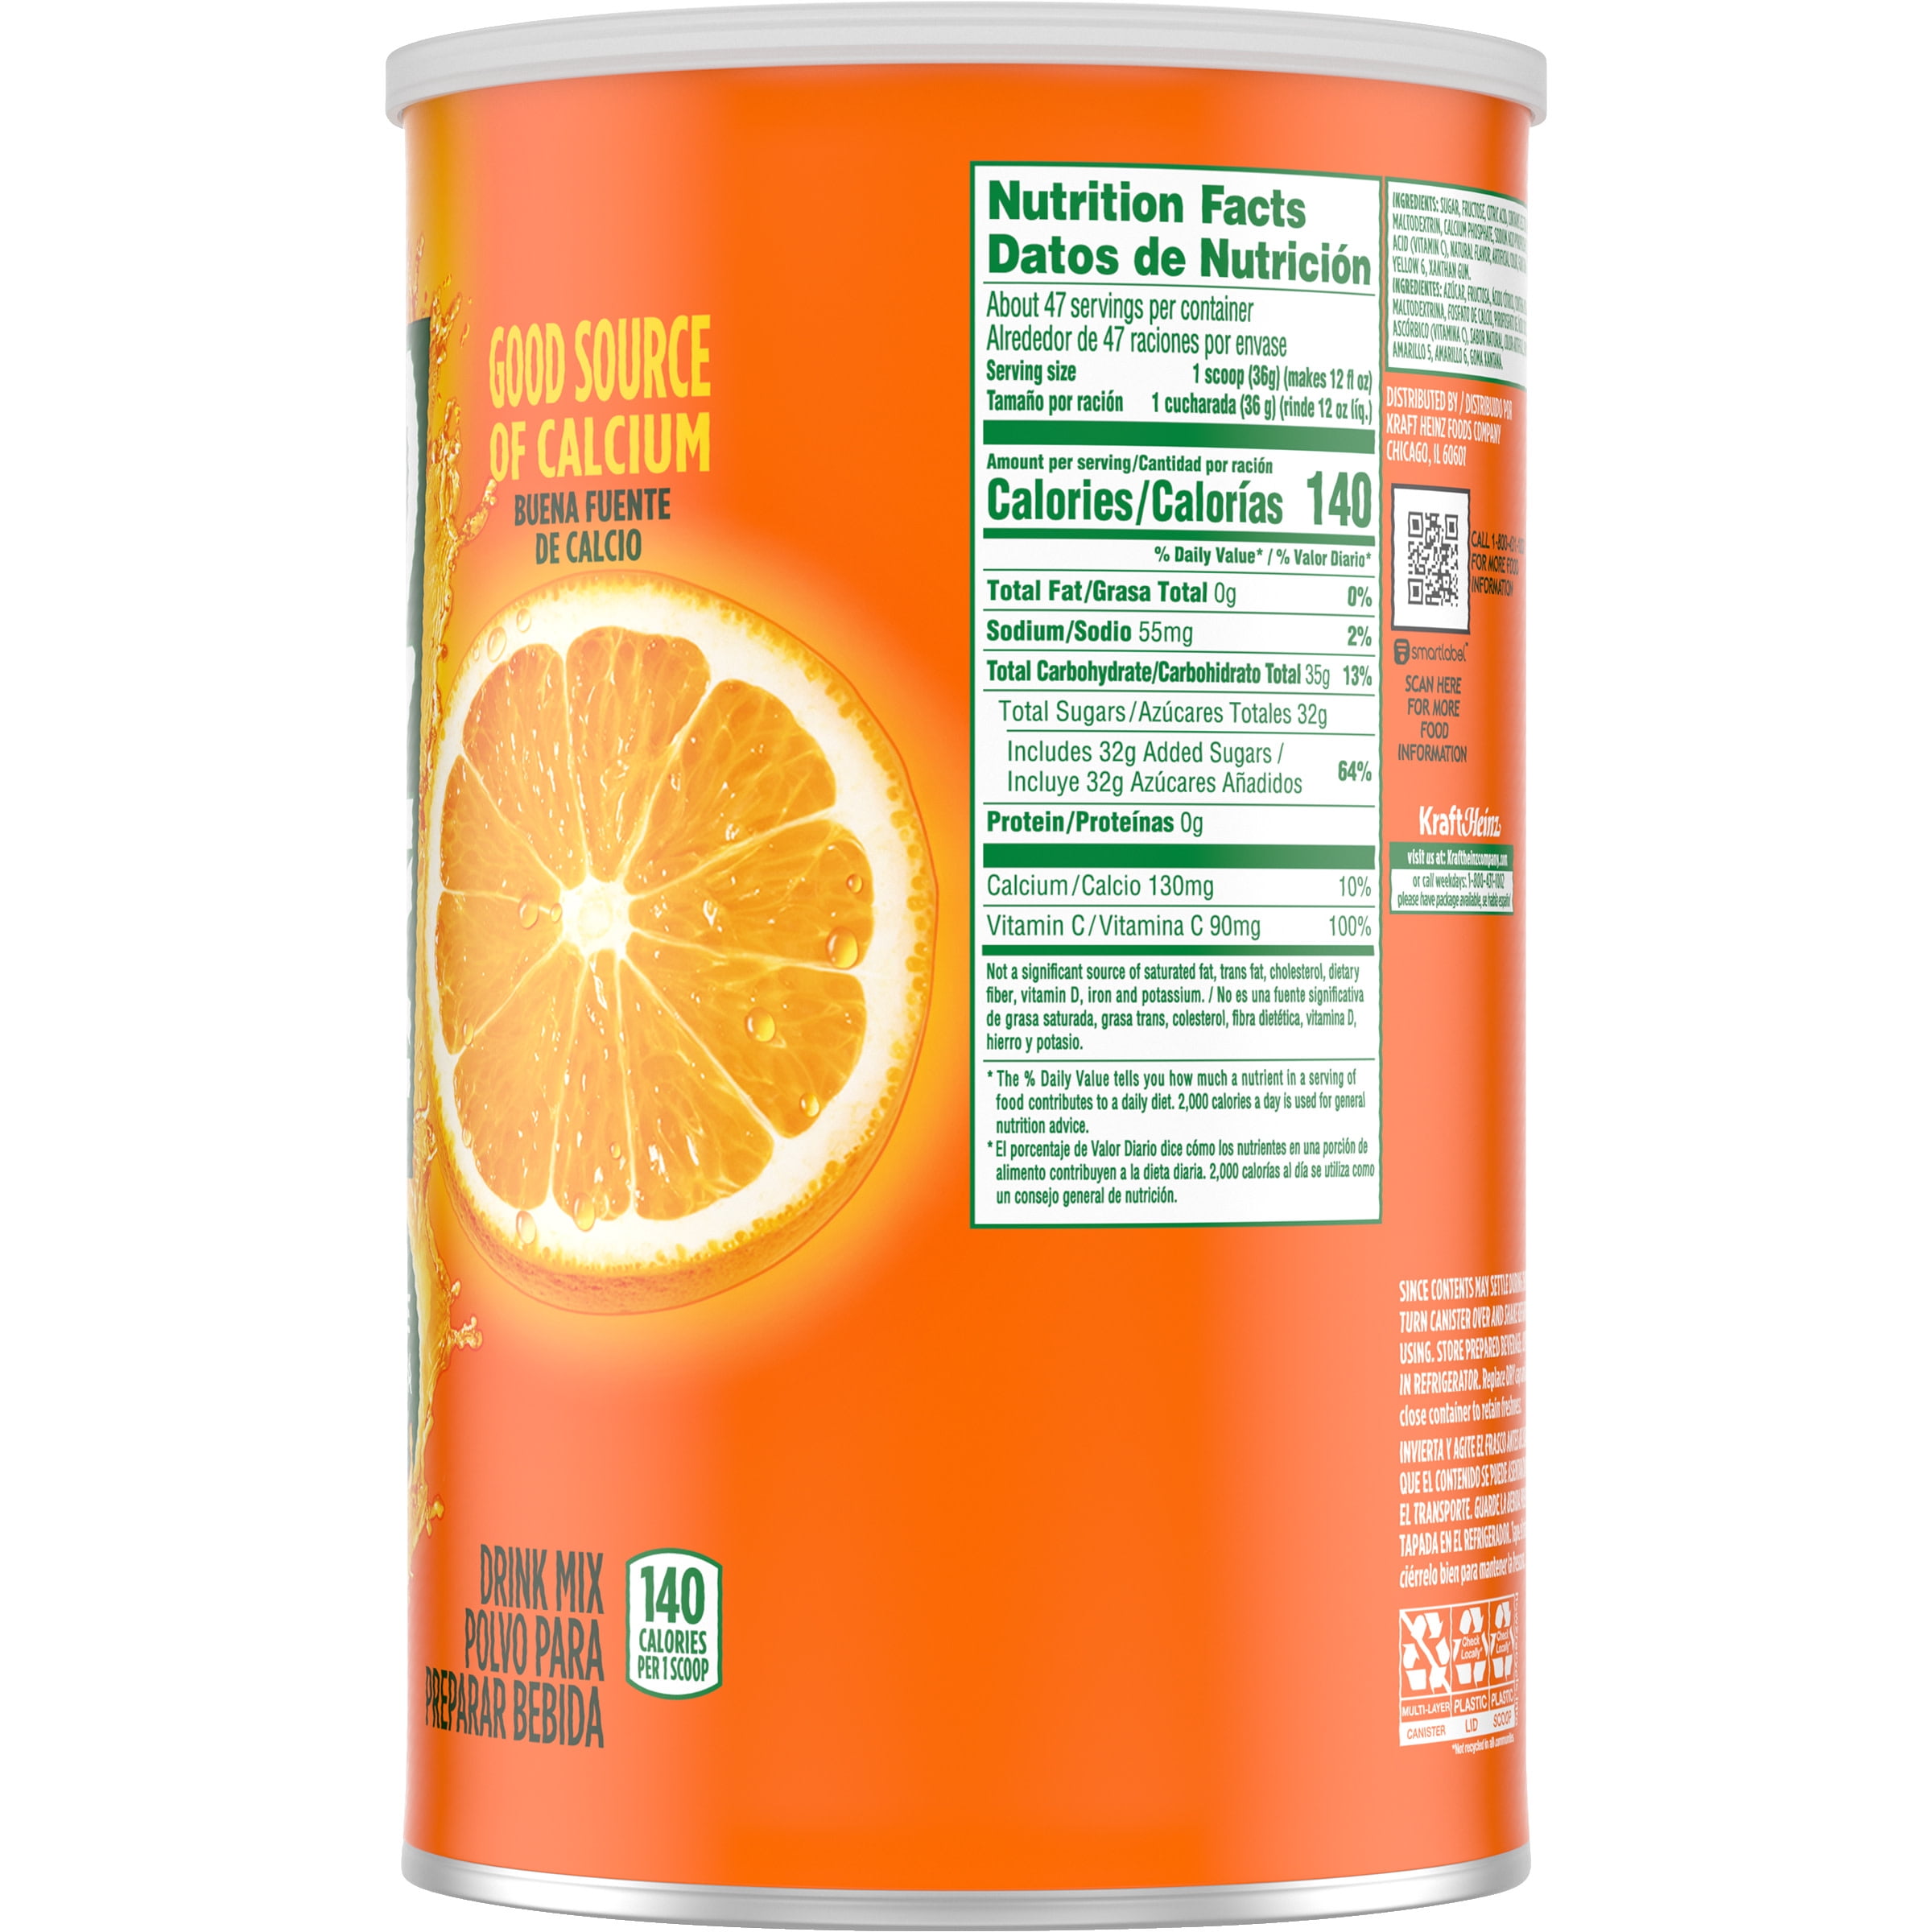 Tang 1 Orange Drink, 2.5 Kg